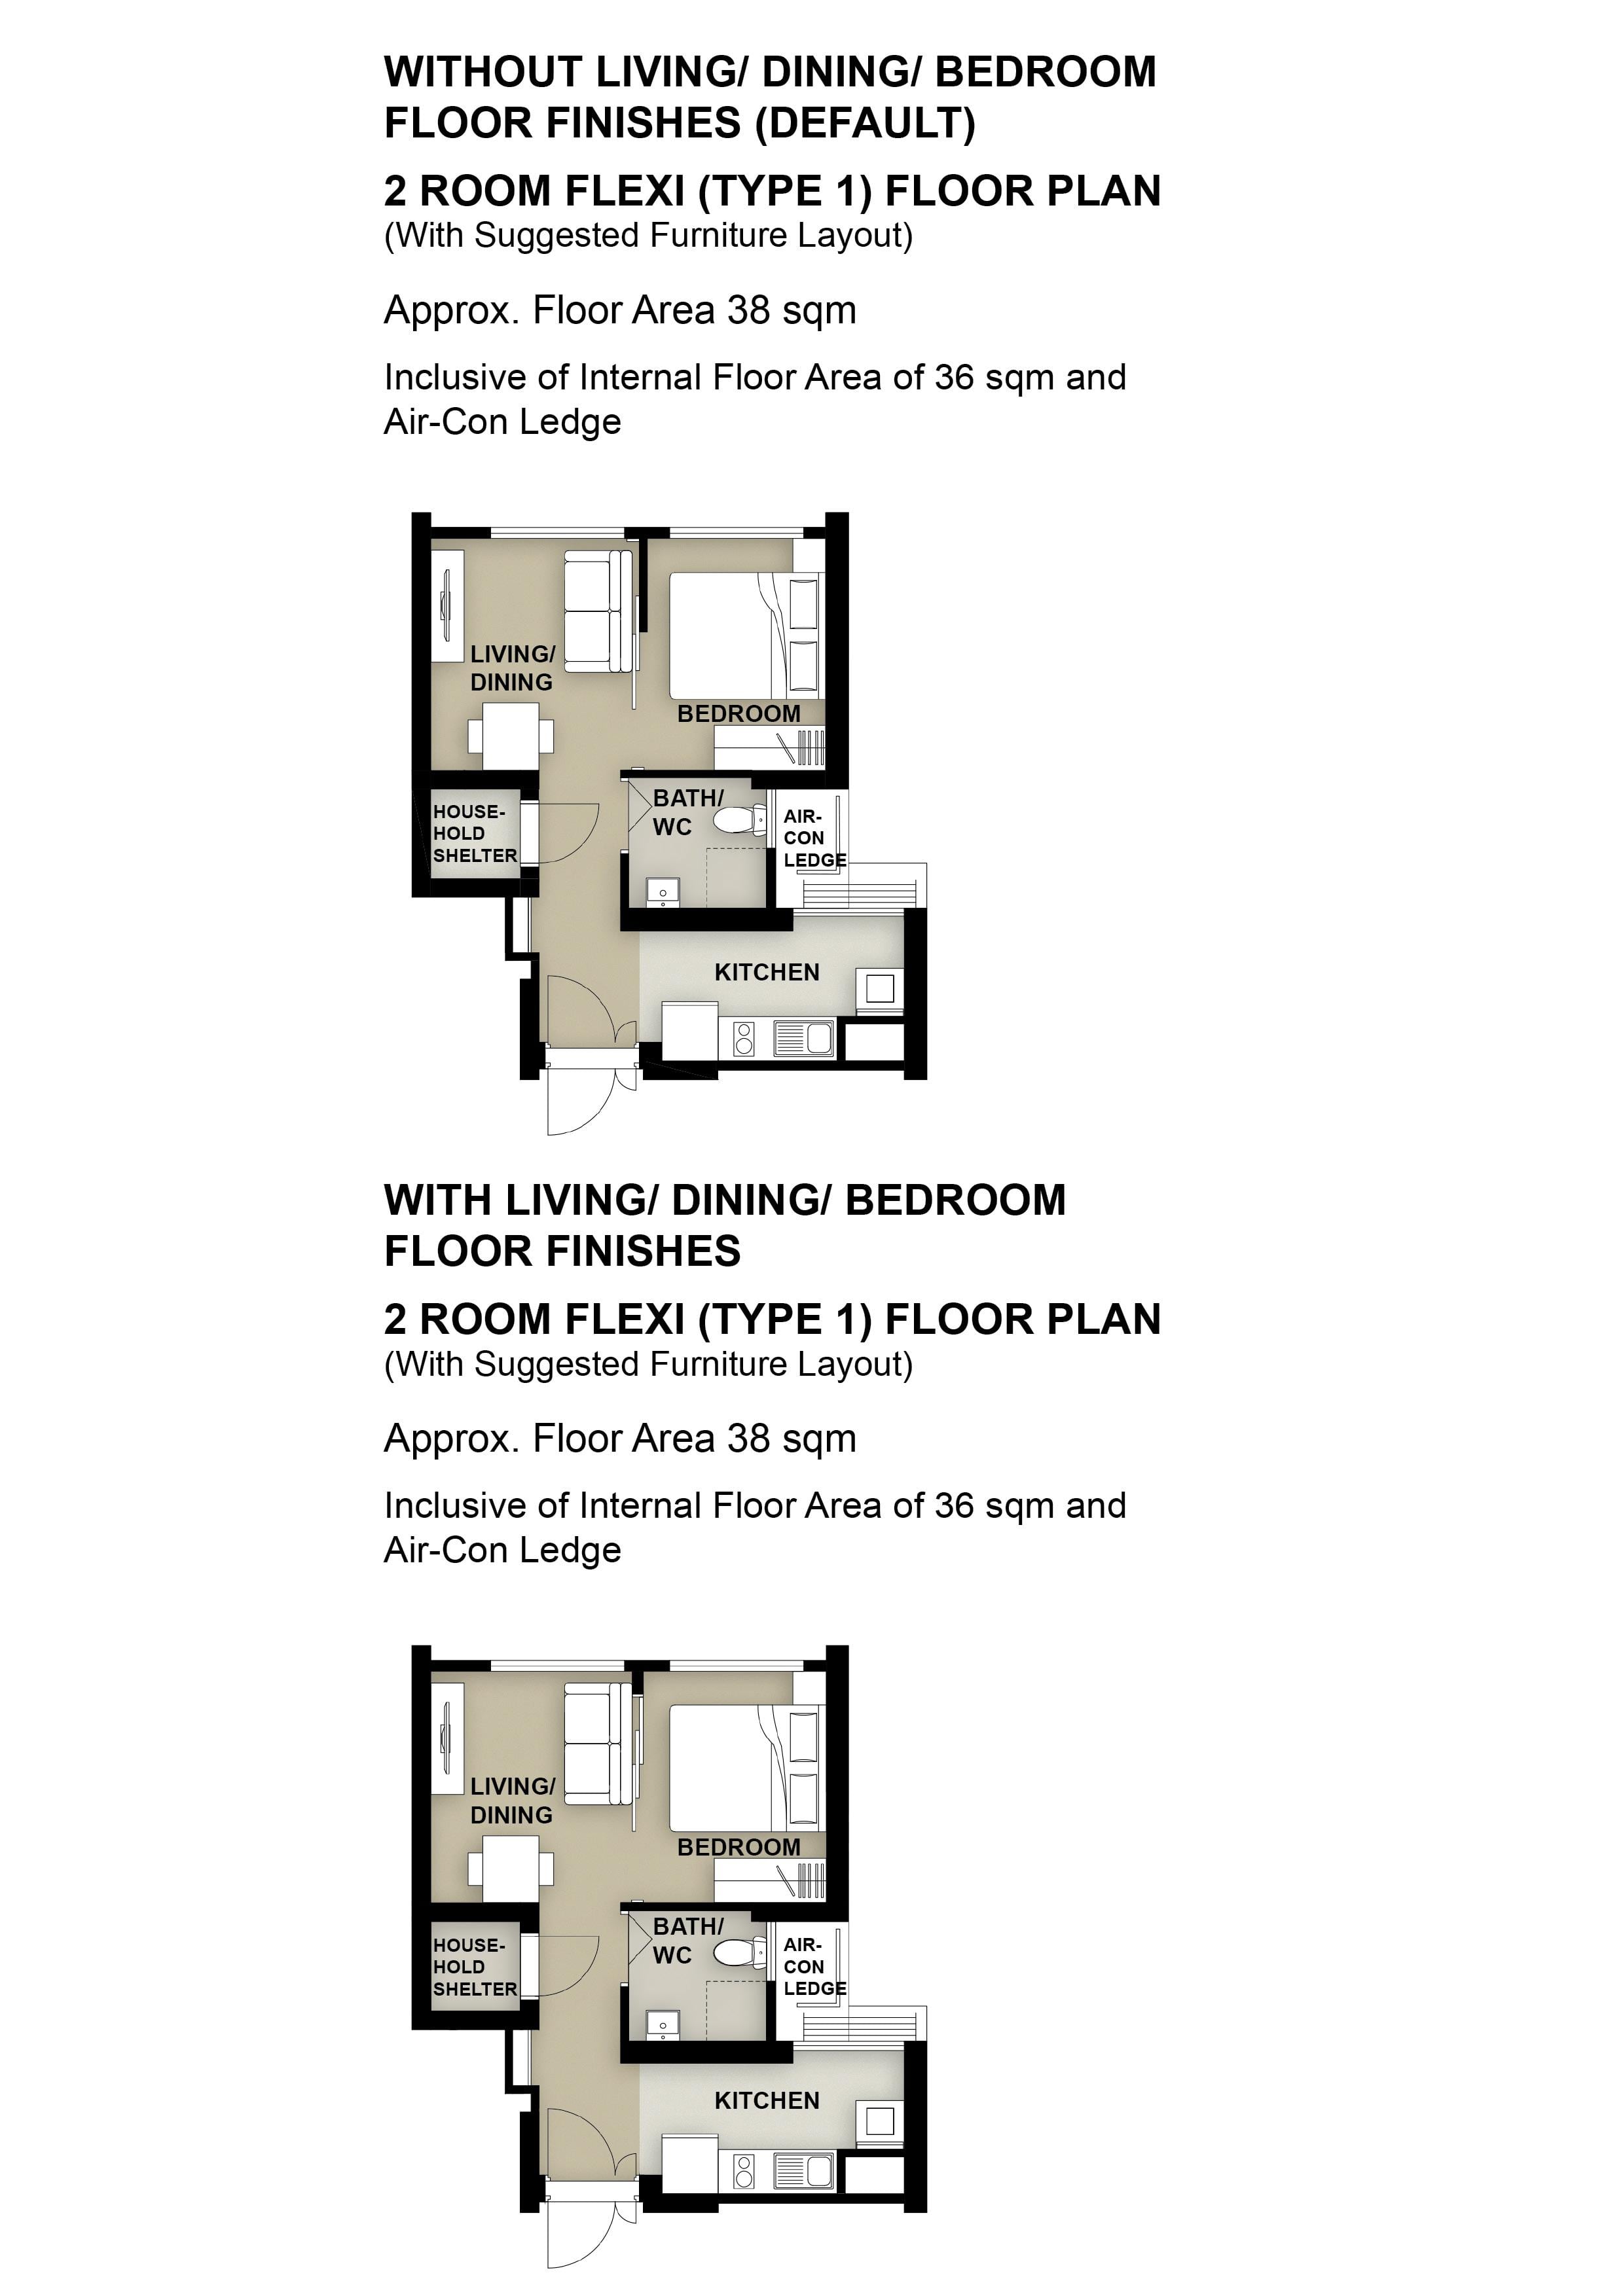 Central Weave @ AMK 2 Room Flexi Type 1 Floor Plan